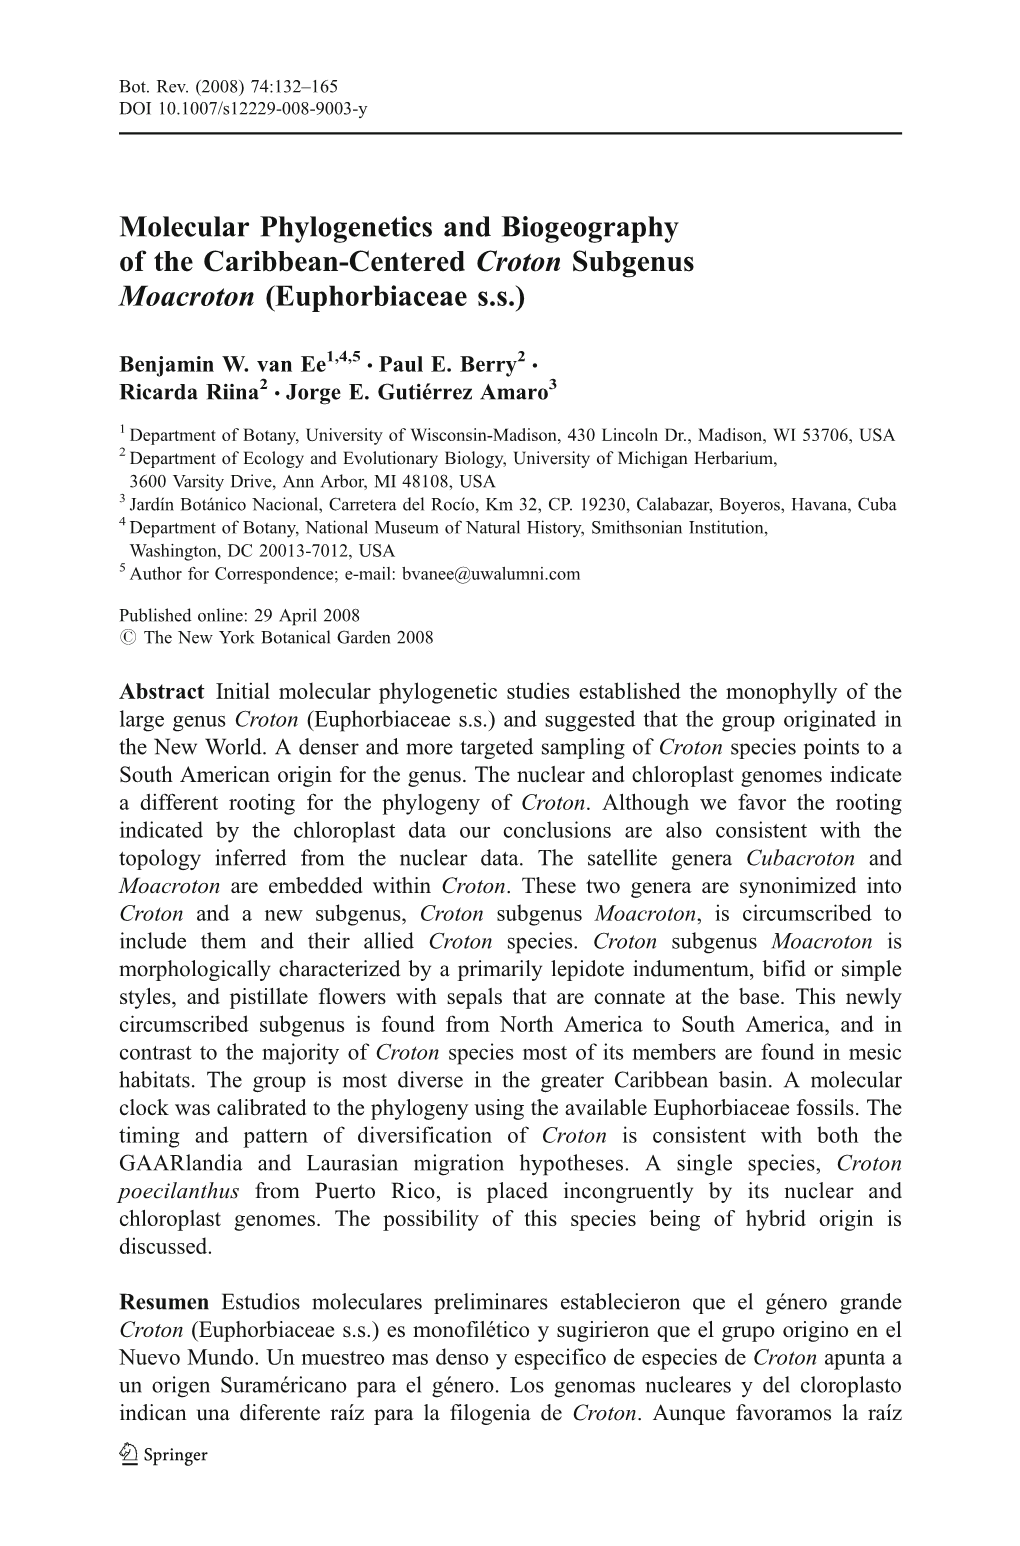 Molecular Phylogenetics and Biogeography of the Caribbean-Centered Croton Subgenus Moacroton (Euphorbiaceae S.S.)